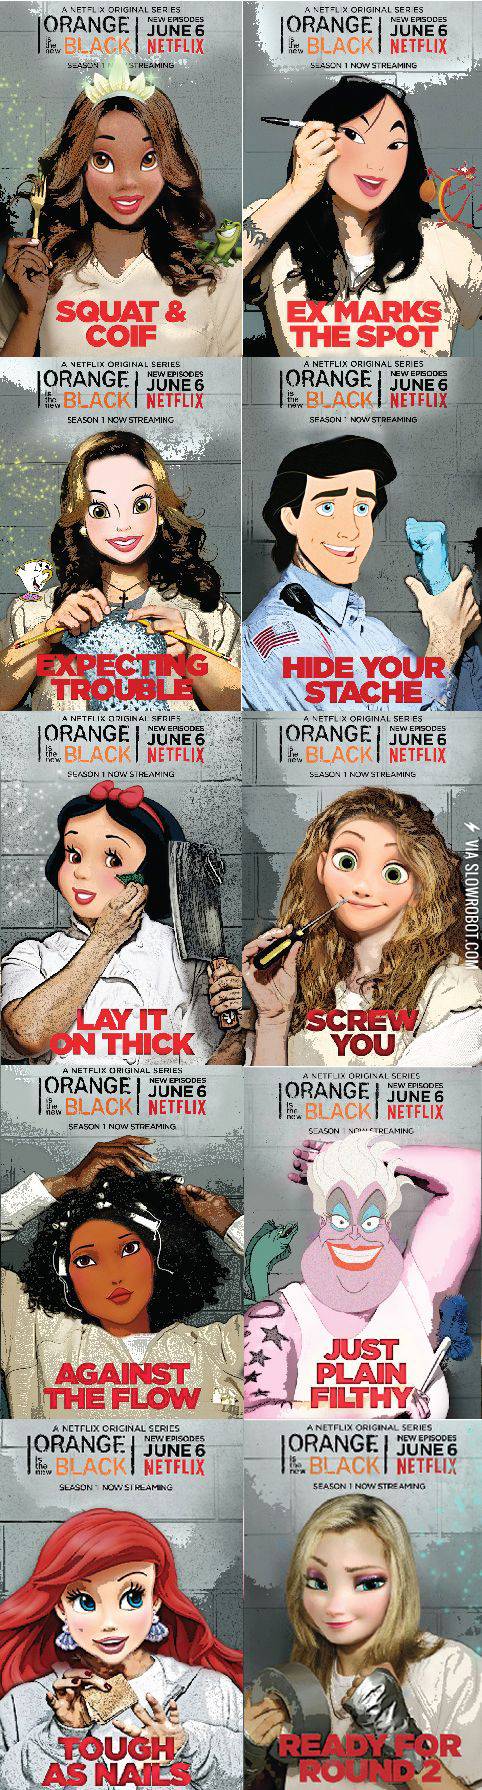 Orange+is+the+New+Black+and+Disney+princess+mash-up.